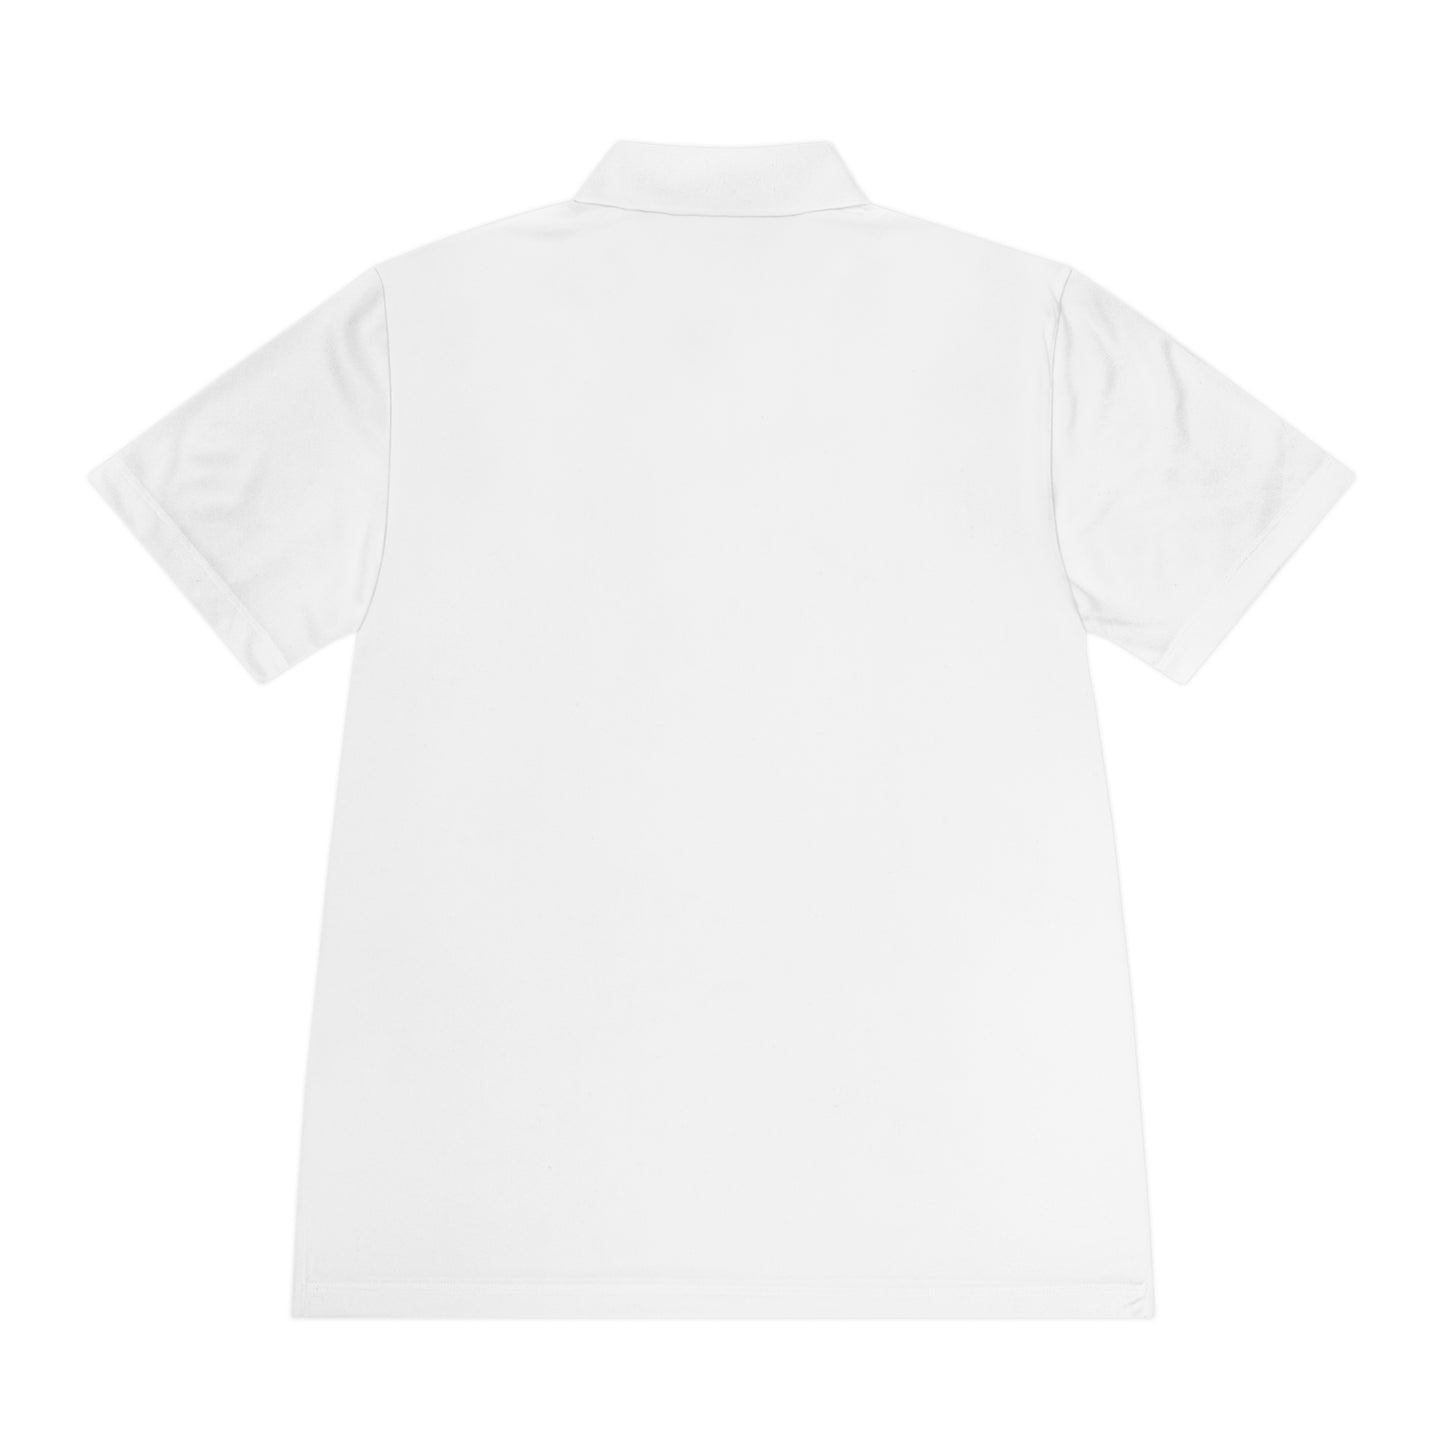 Sumba Men's Sport Polo Shirt